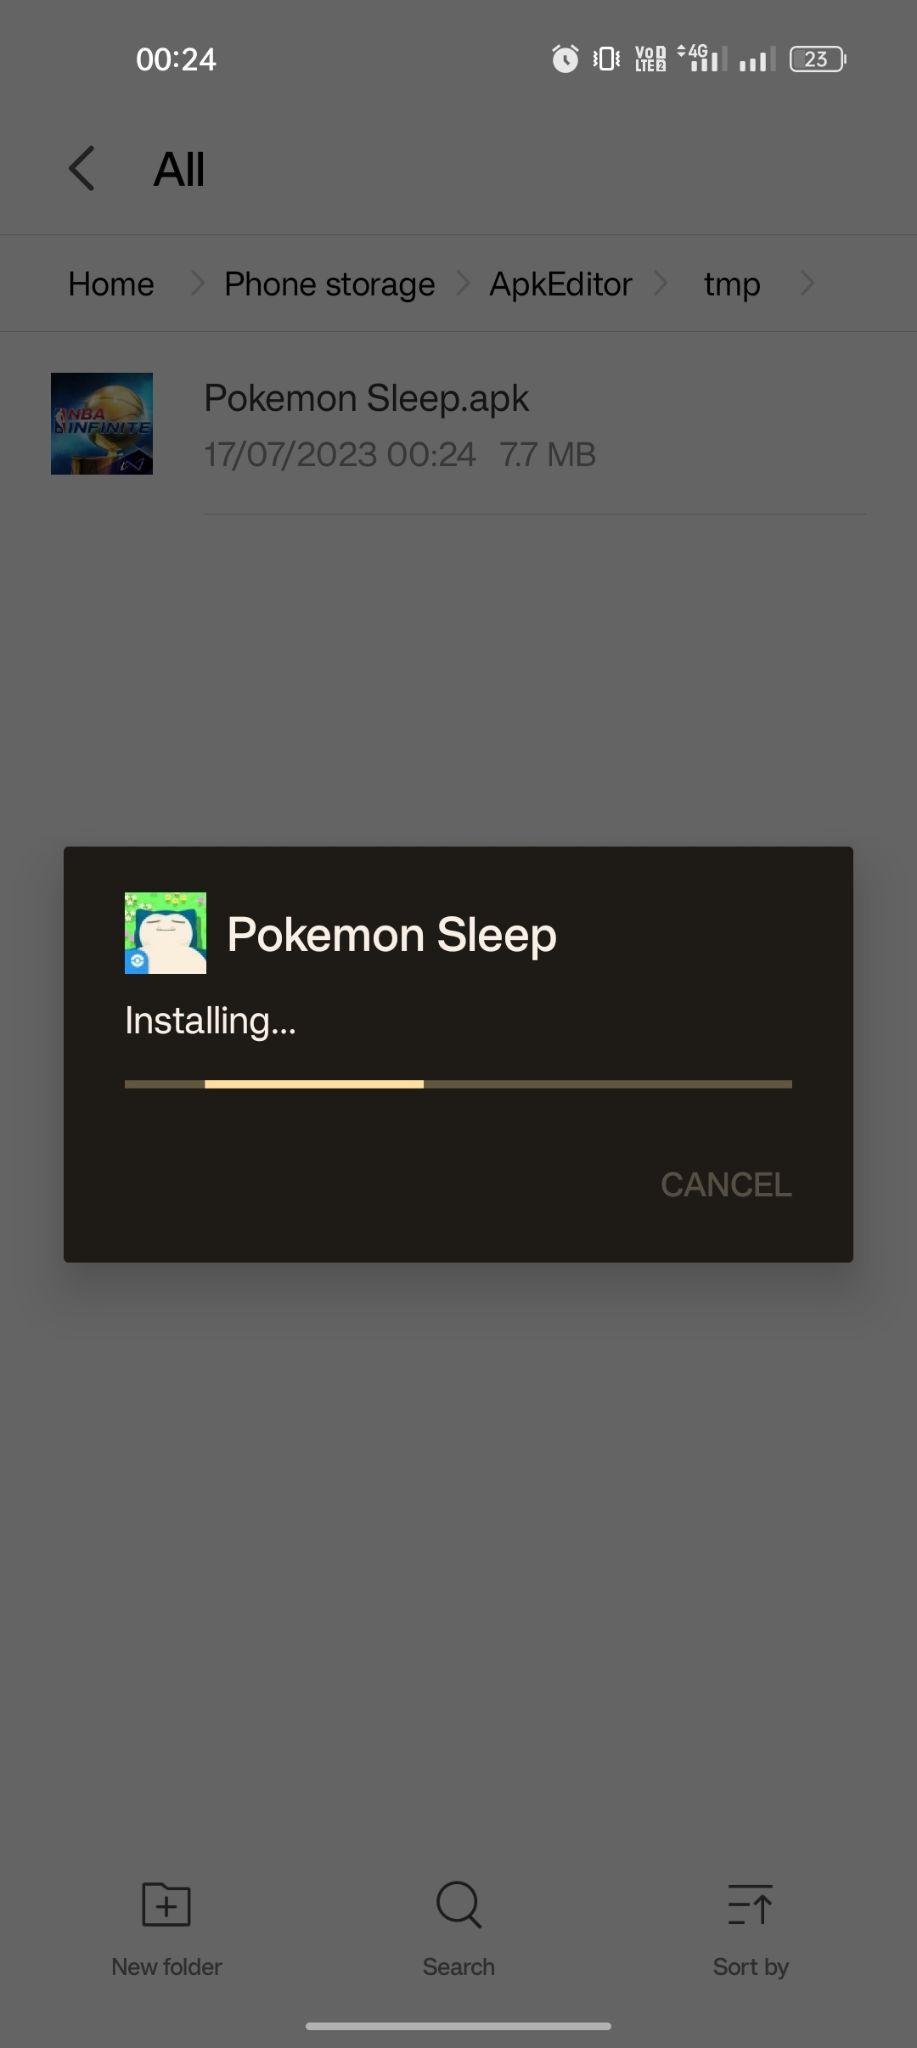 Pokemon Sleep apk installing